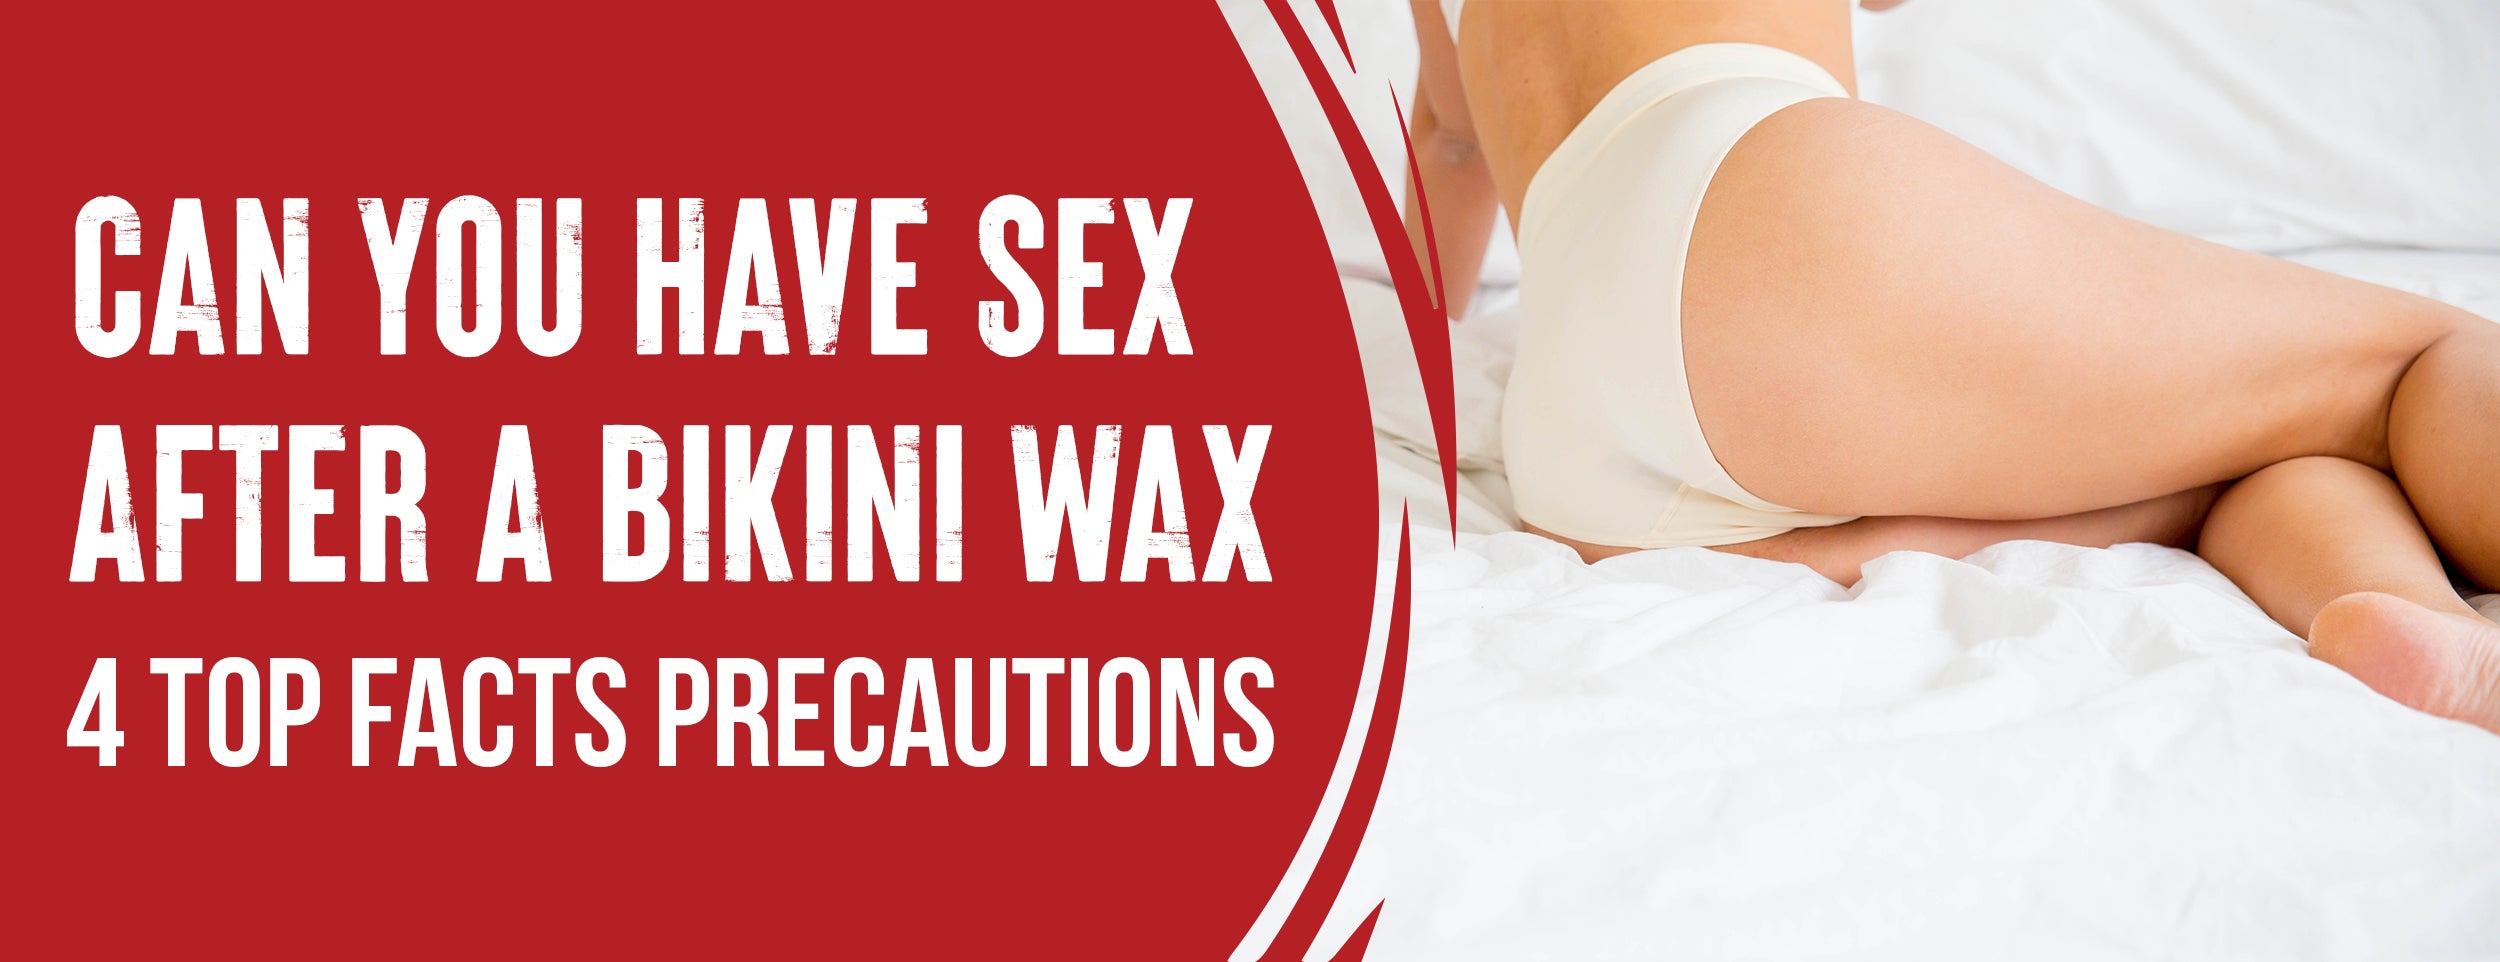 Top Facts & Precautions After Getting A Bikini Wax